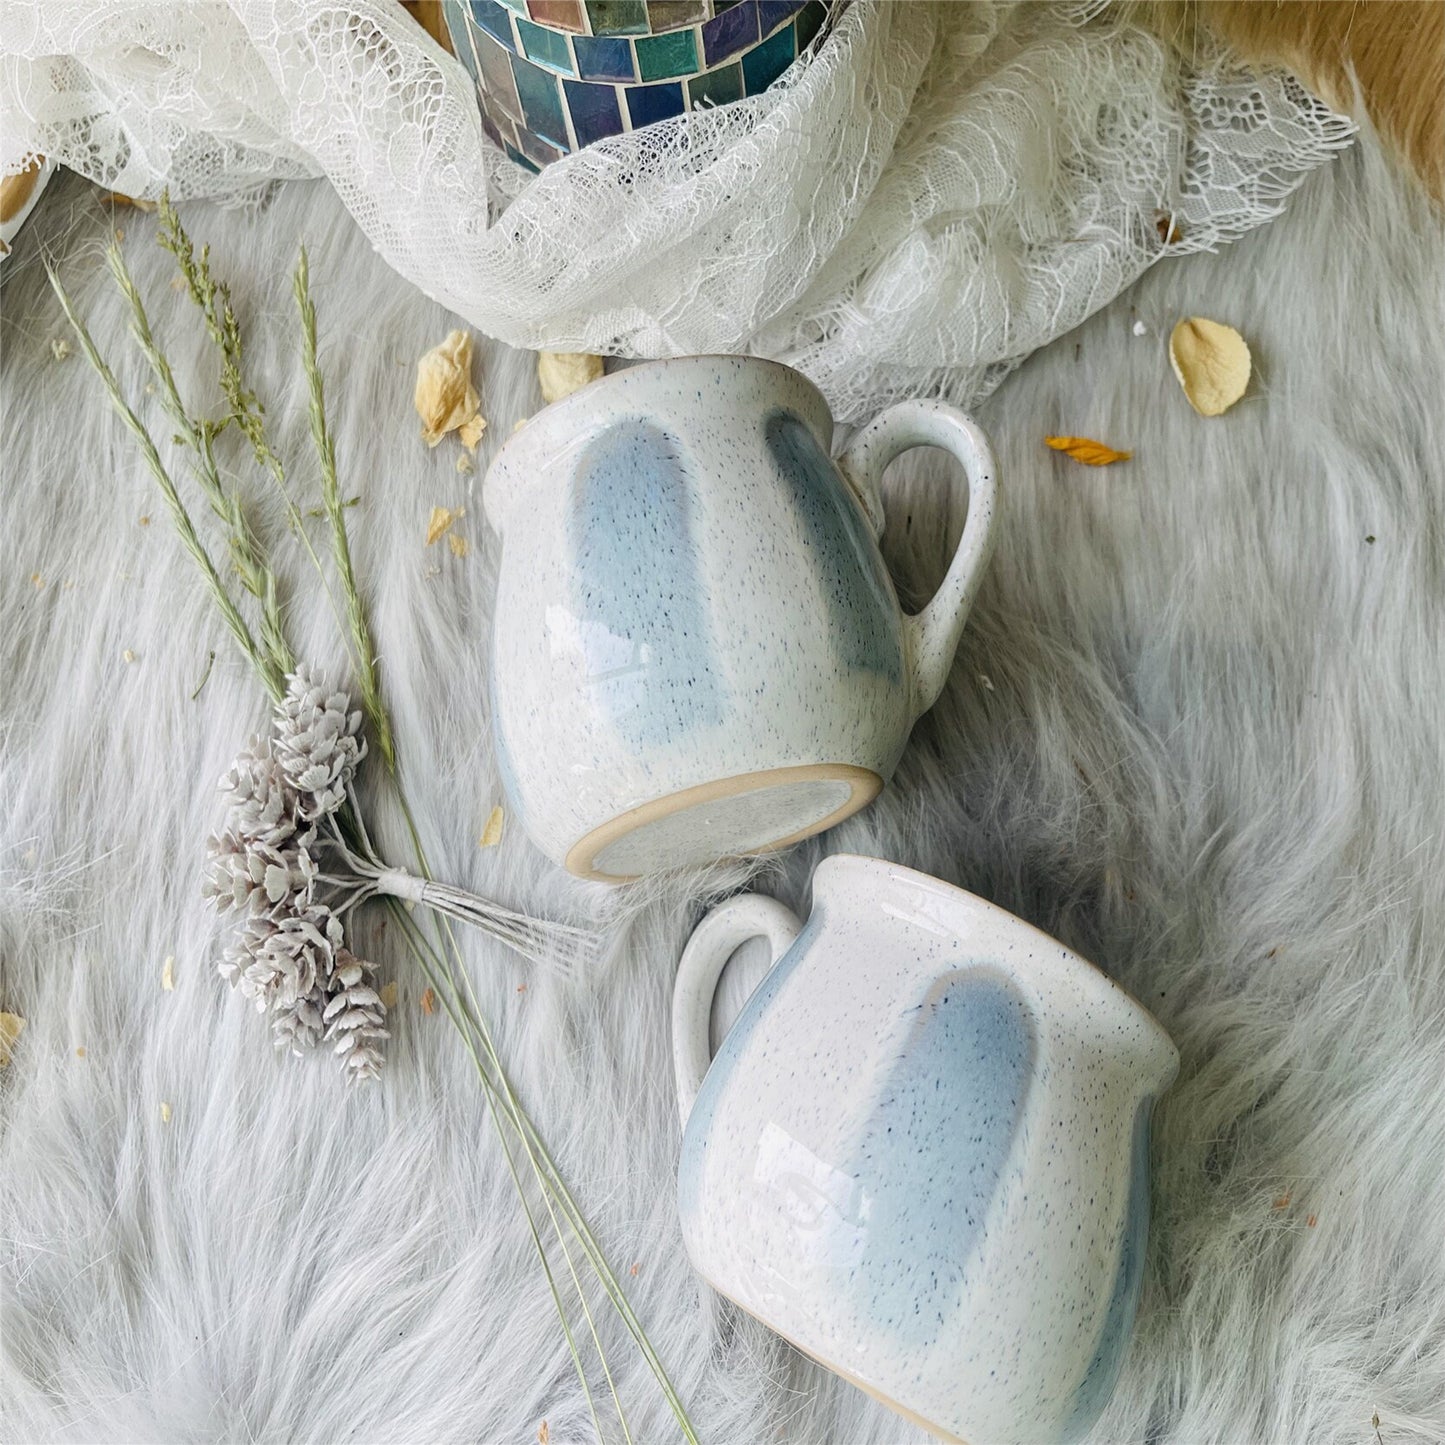 Ceramic Coffee Mug Handmade, 10 Oz Blue And White Personalized Pottery Mug